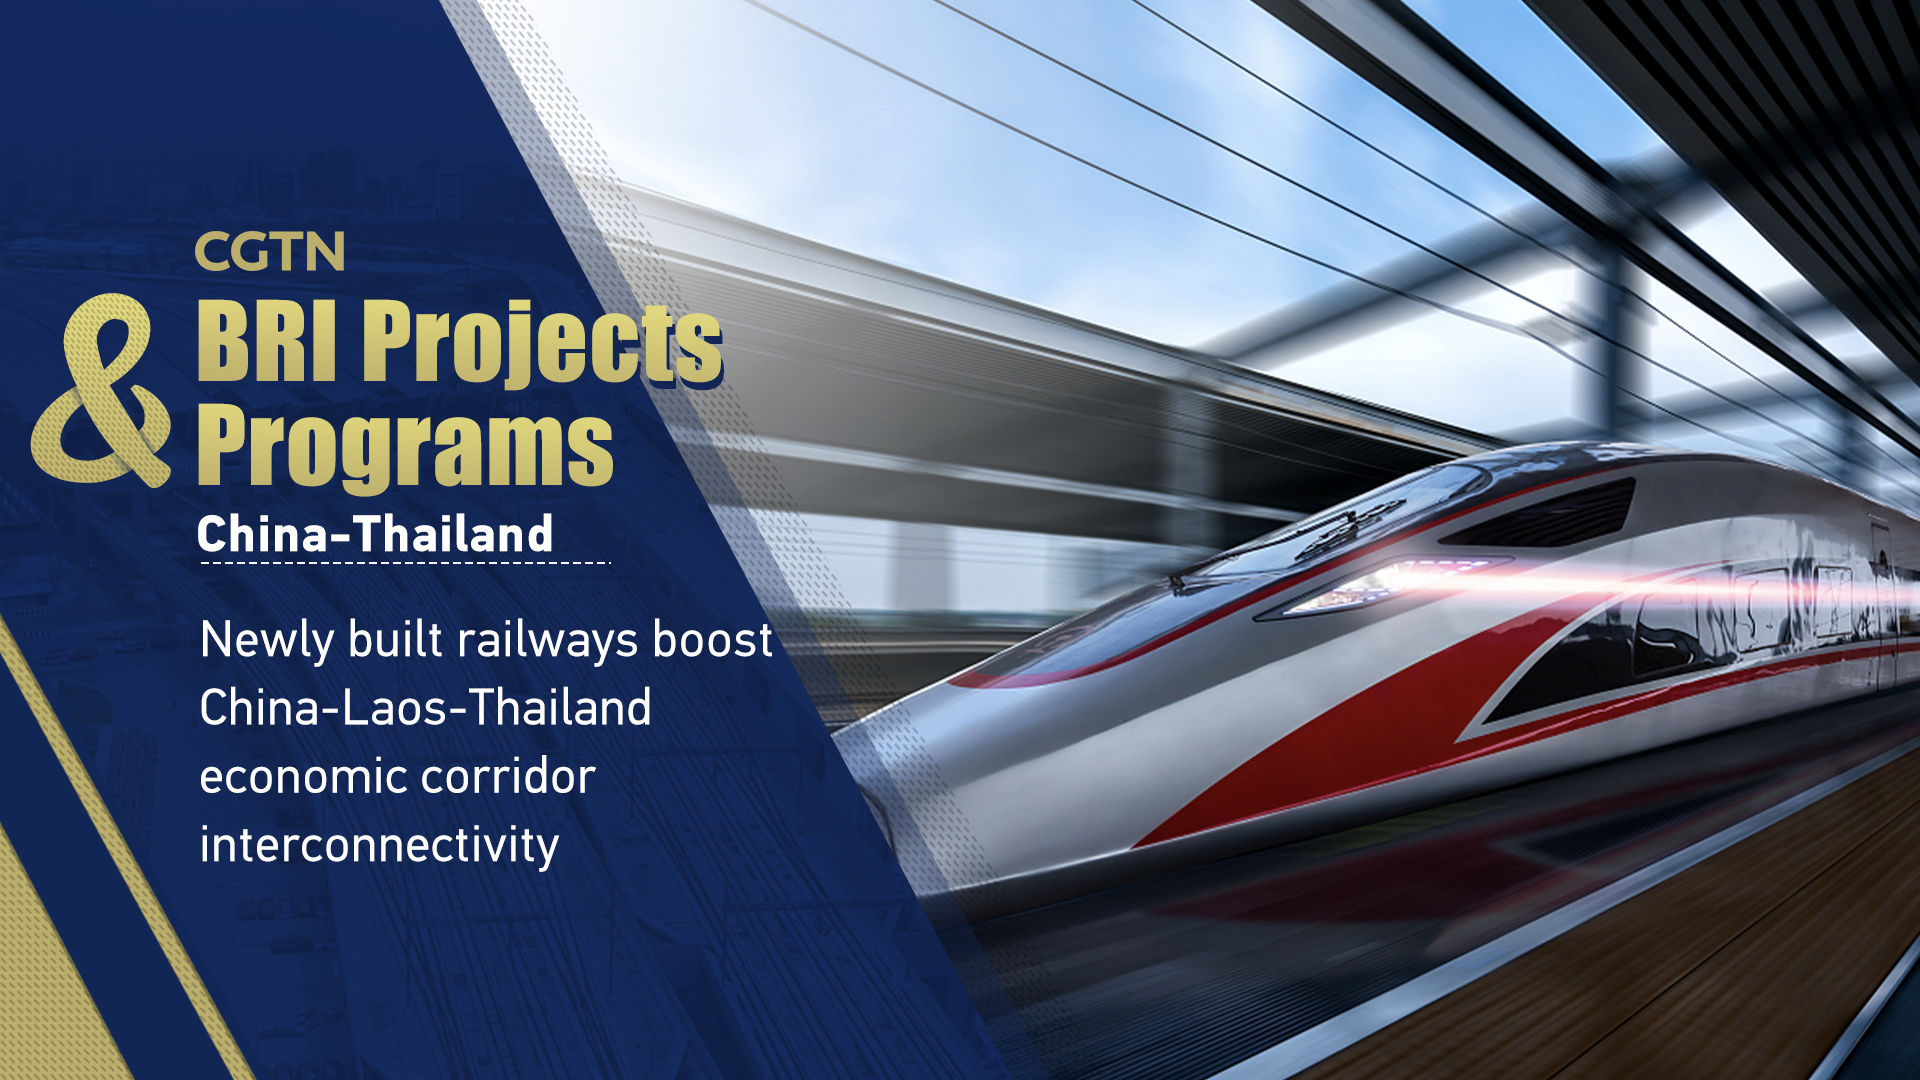 BRI Projects & Programs: Railways boost China-Laos-Thailand economic corridor interconnectivity